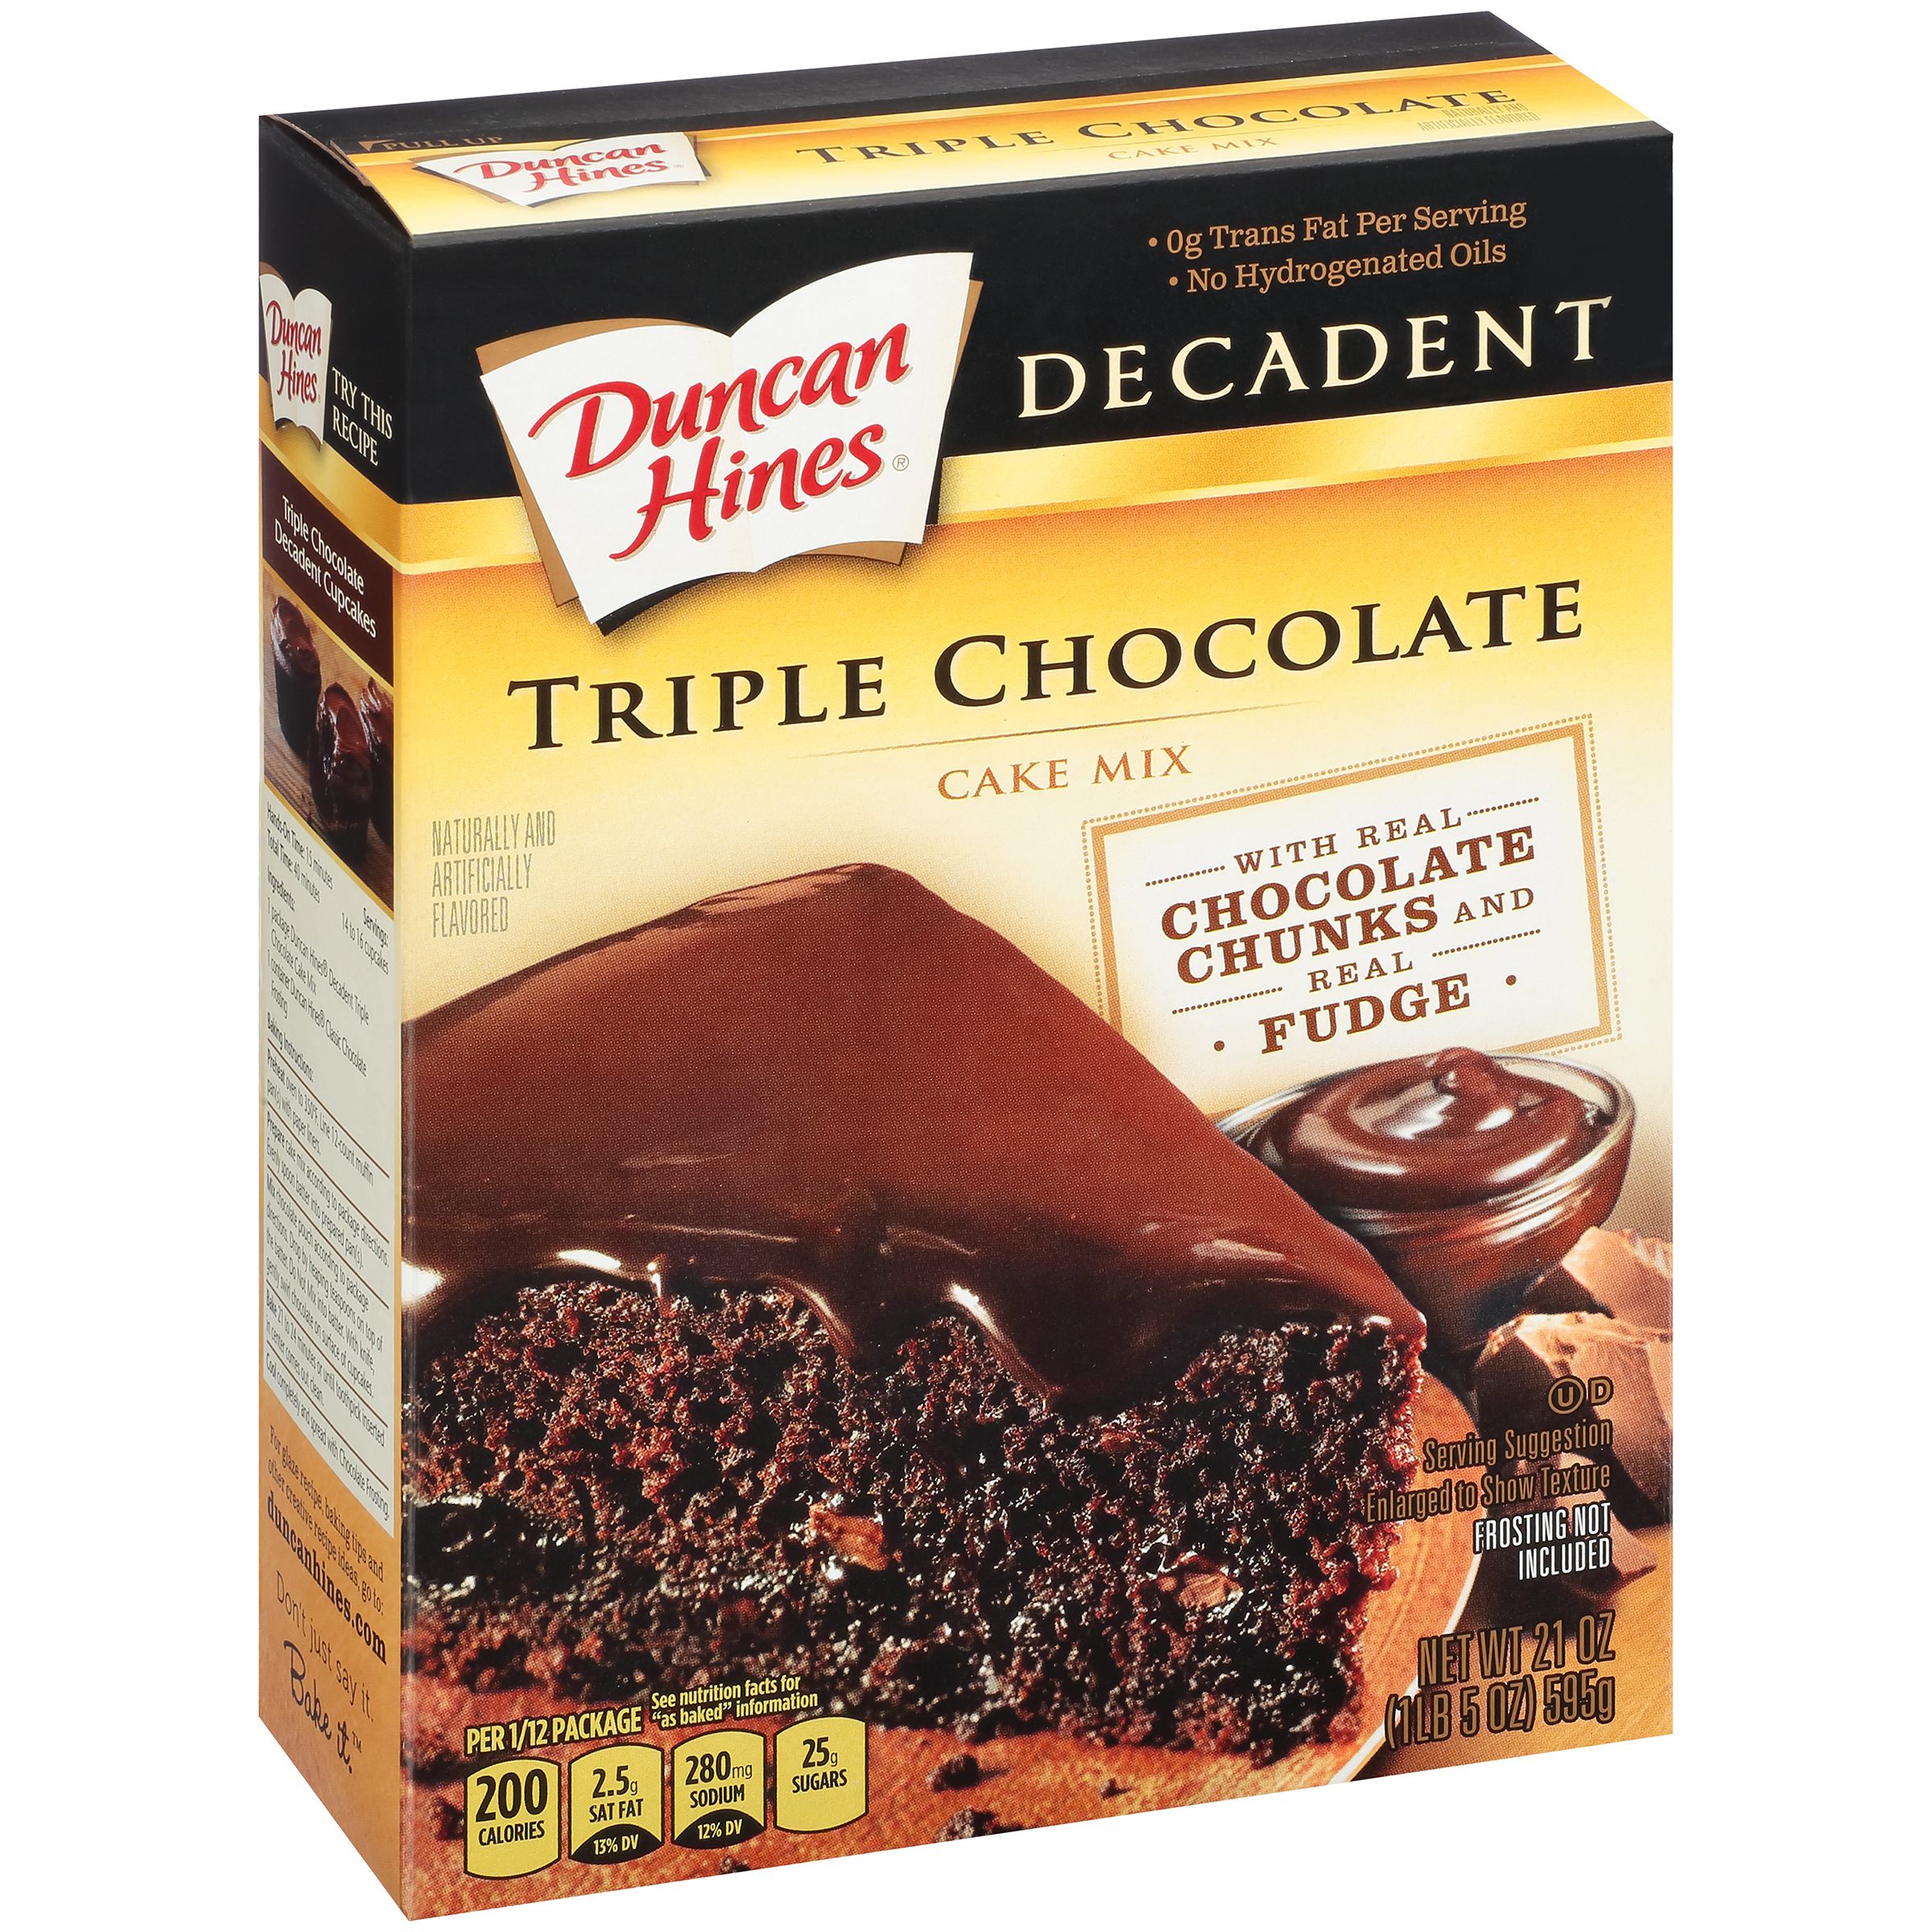 Duncan Hines Decadent Triple Chocolate Cake Mix 21 oz Box - image 1 of 8